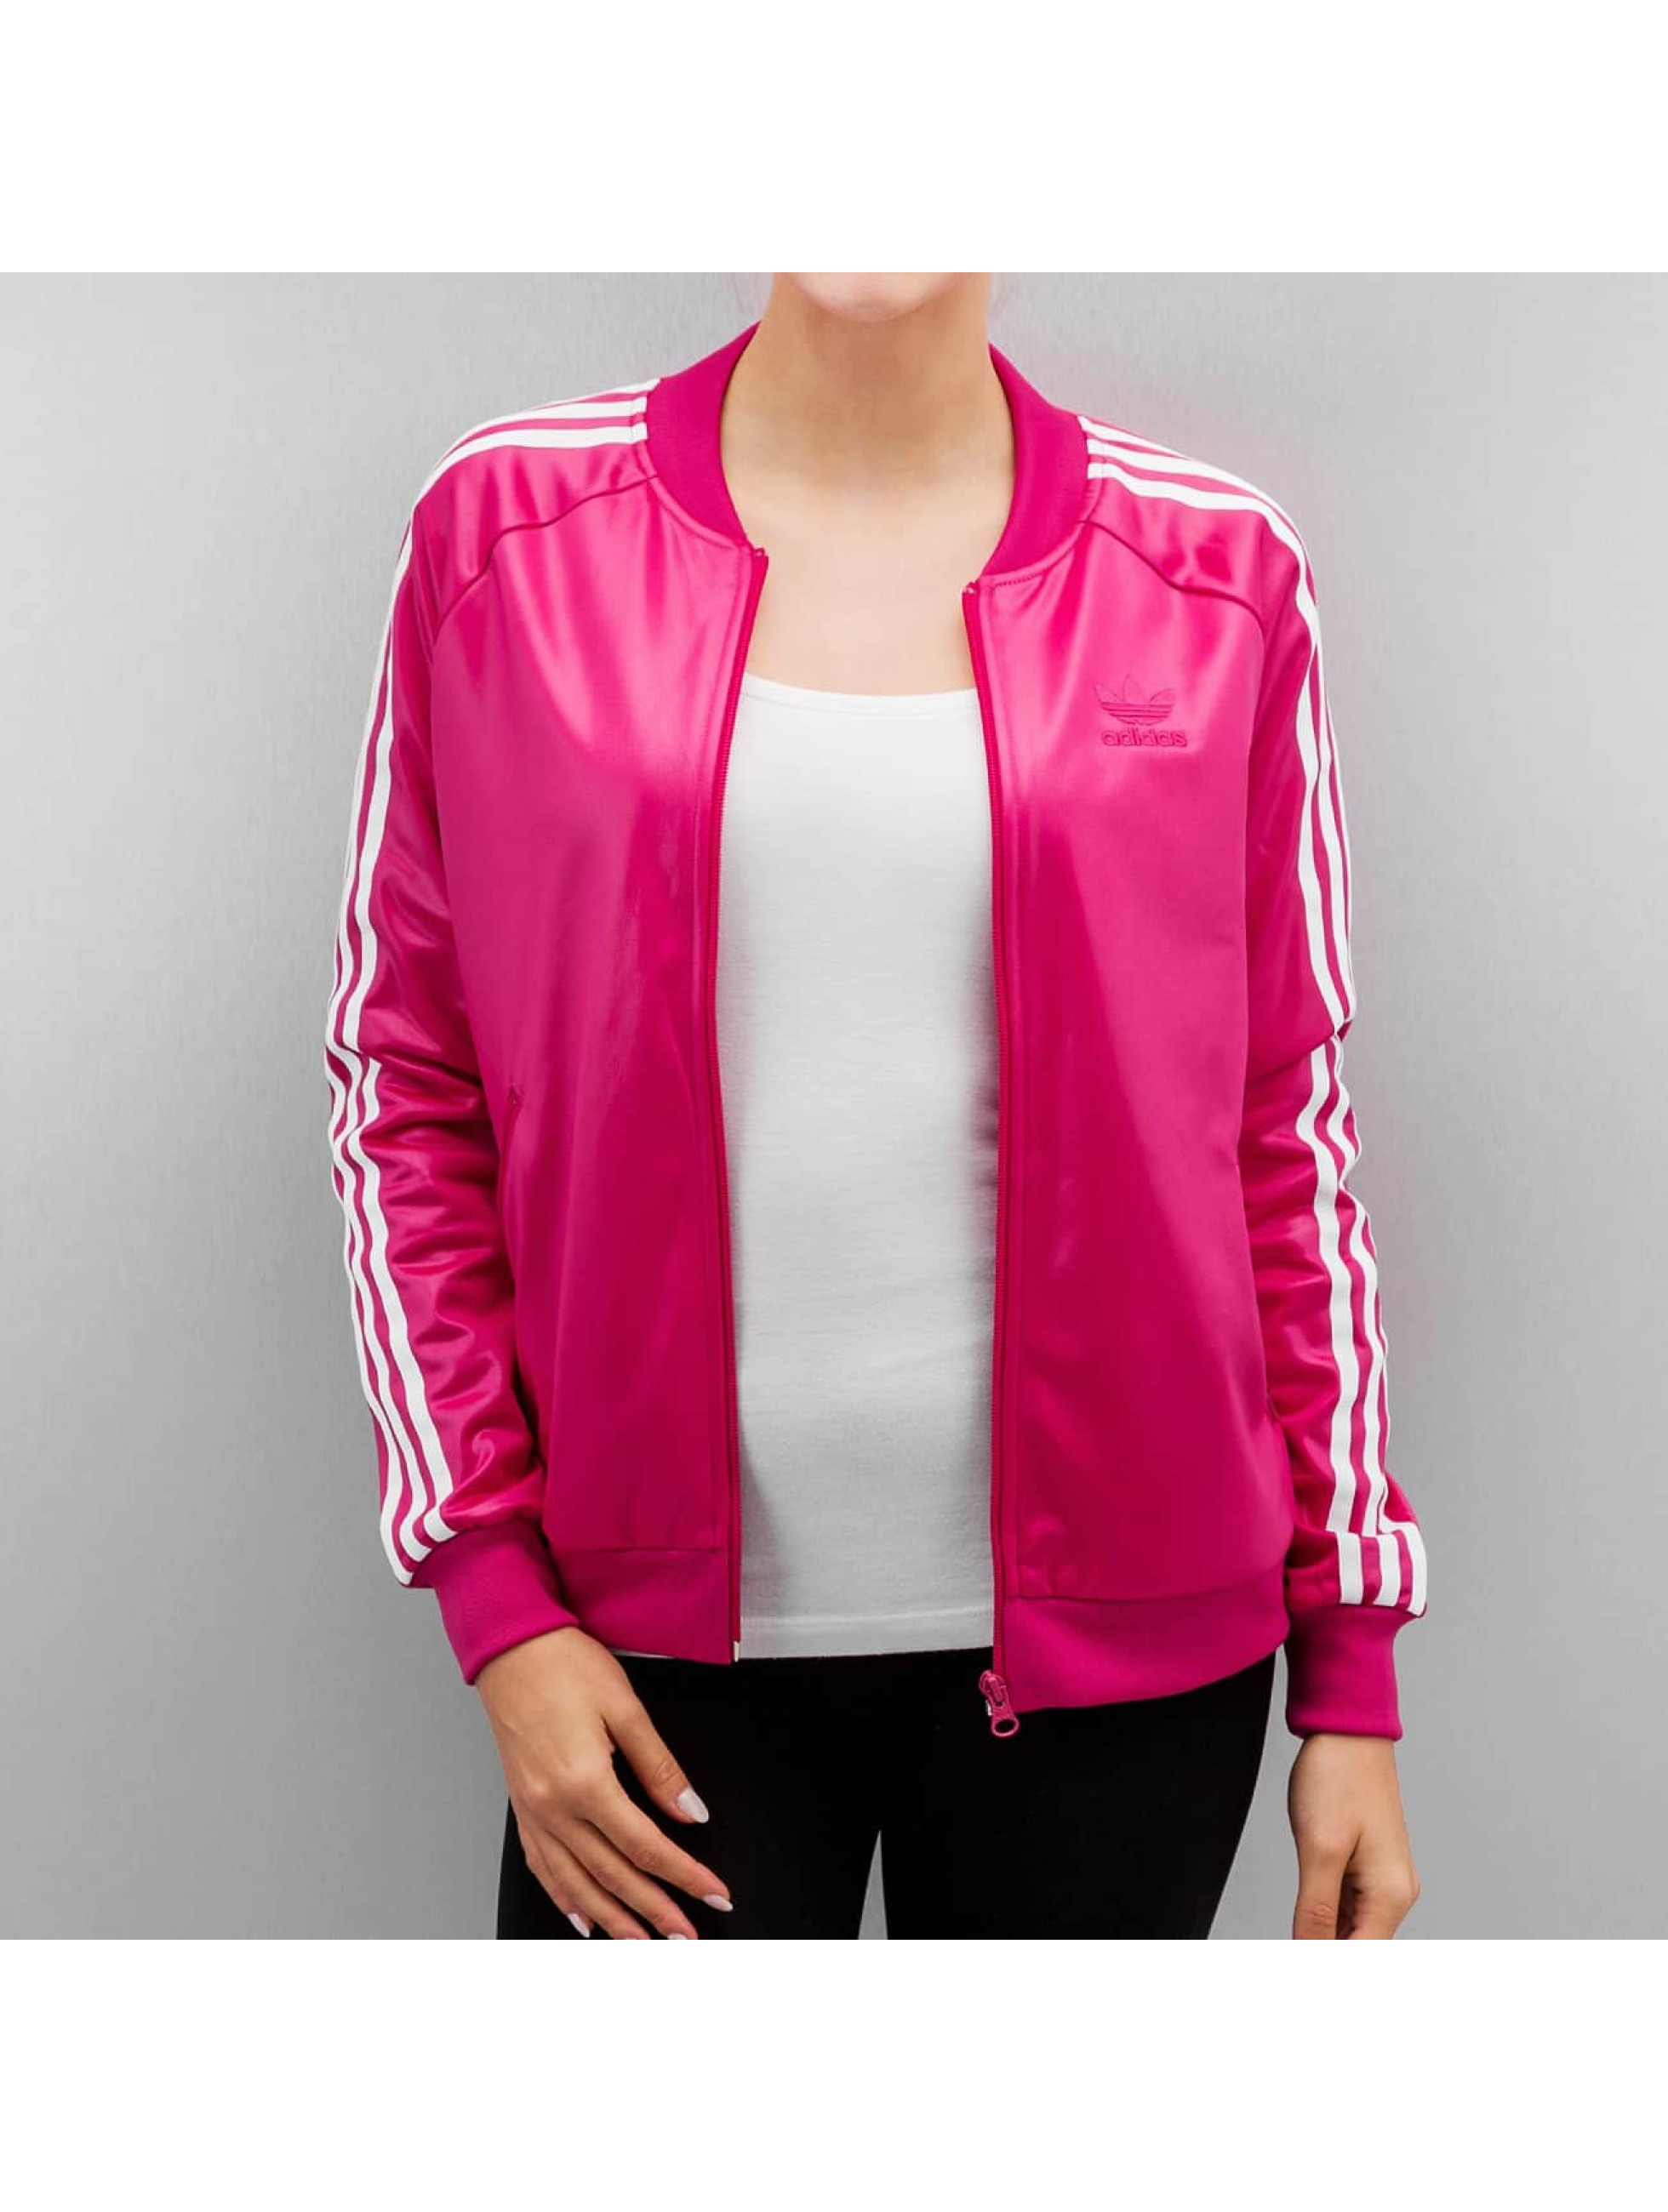 adidas bovenstuk / vest Superstar in pink